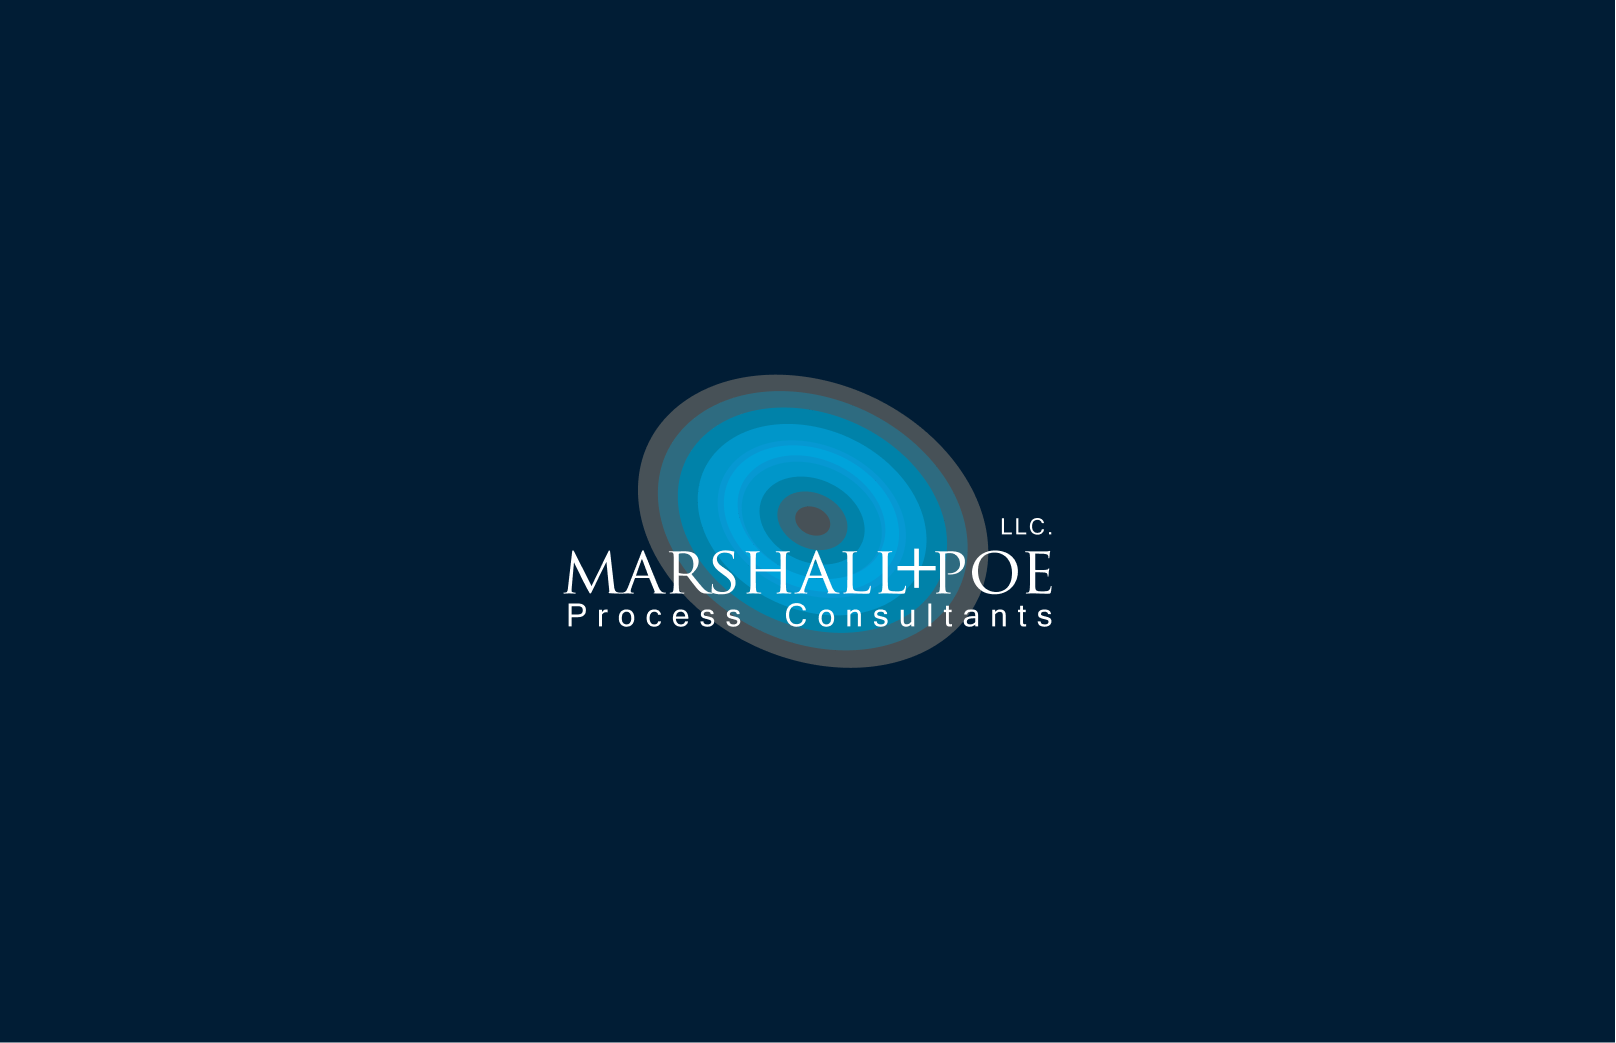 marshall-poe-process-consultants